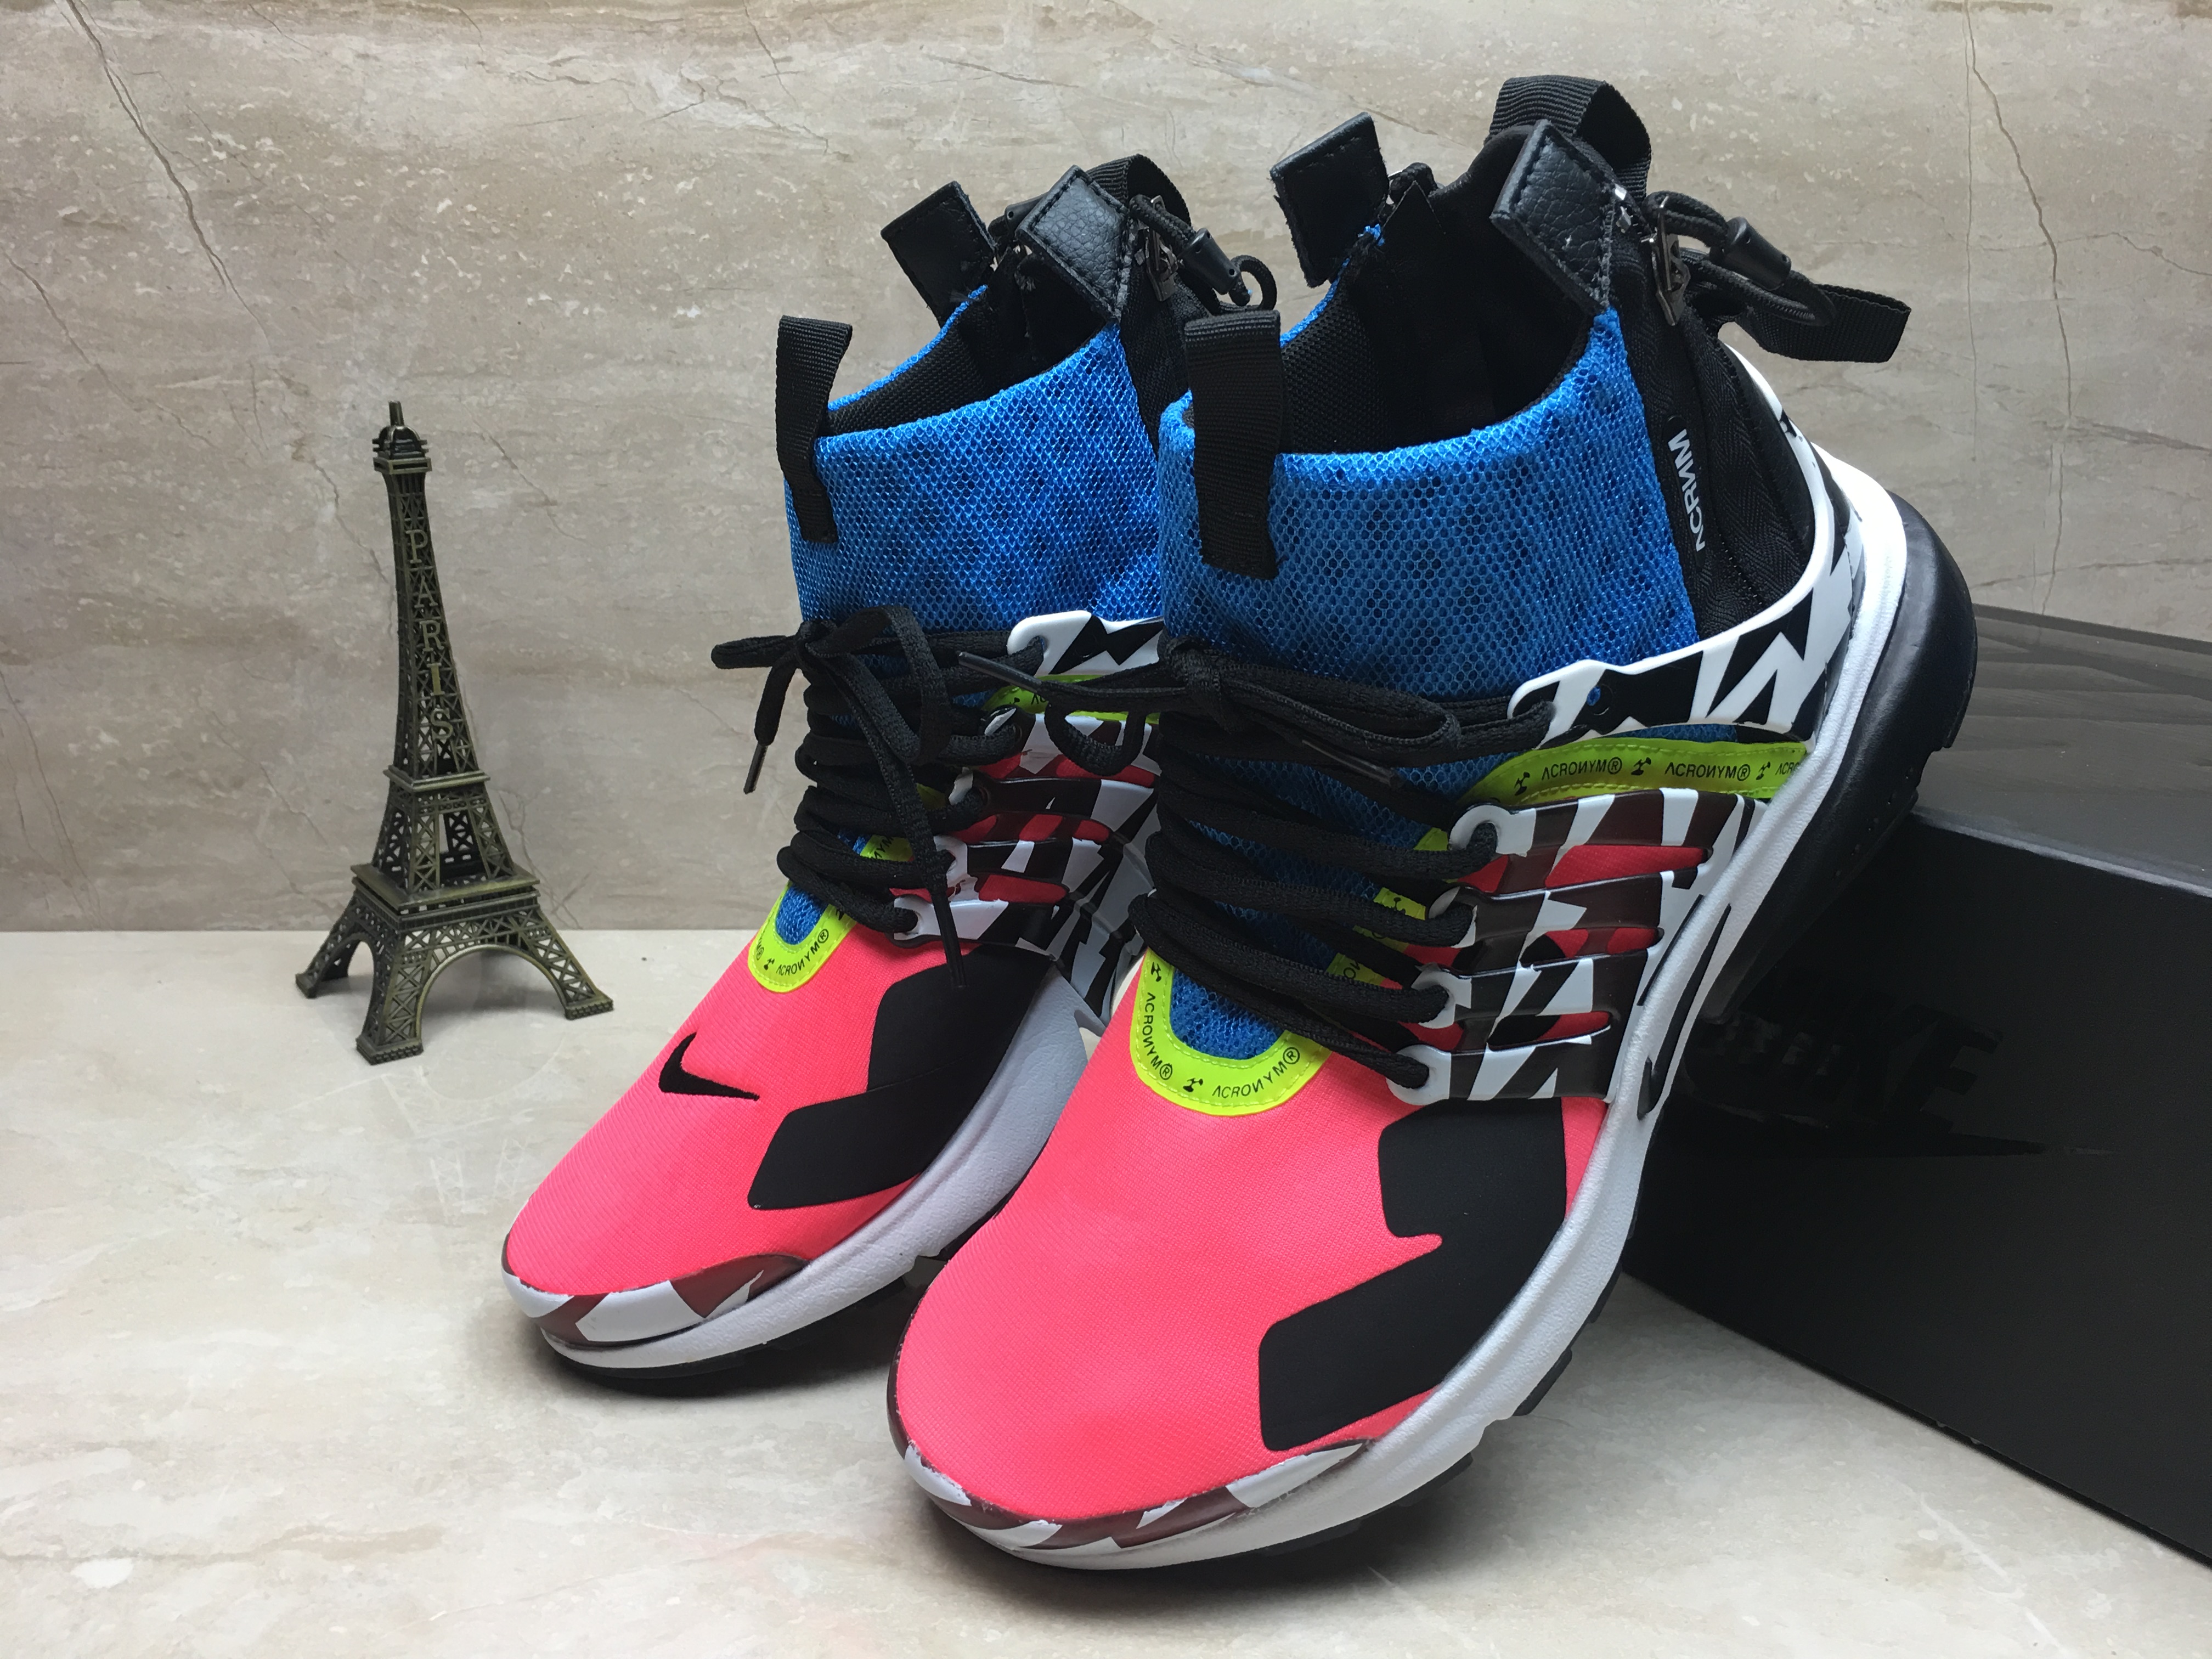 Men Acronym x Nike Air Presto Mid Colorful Shoes